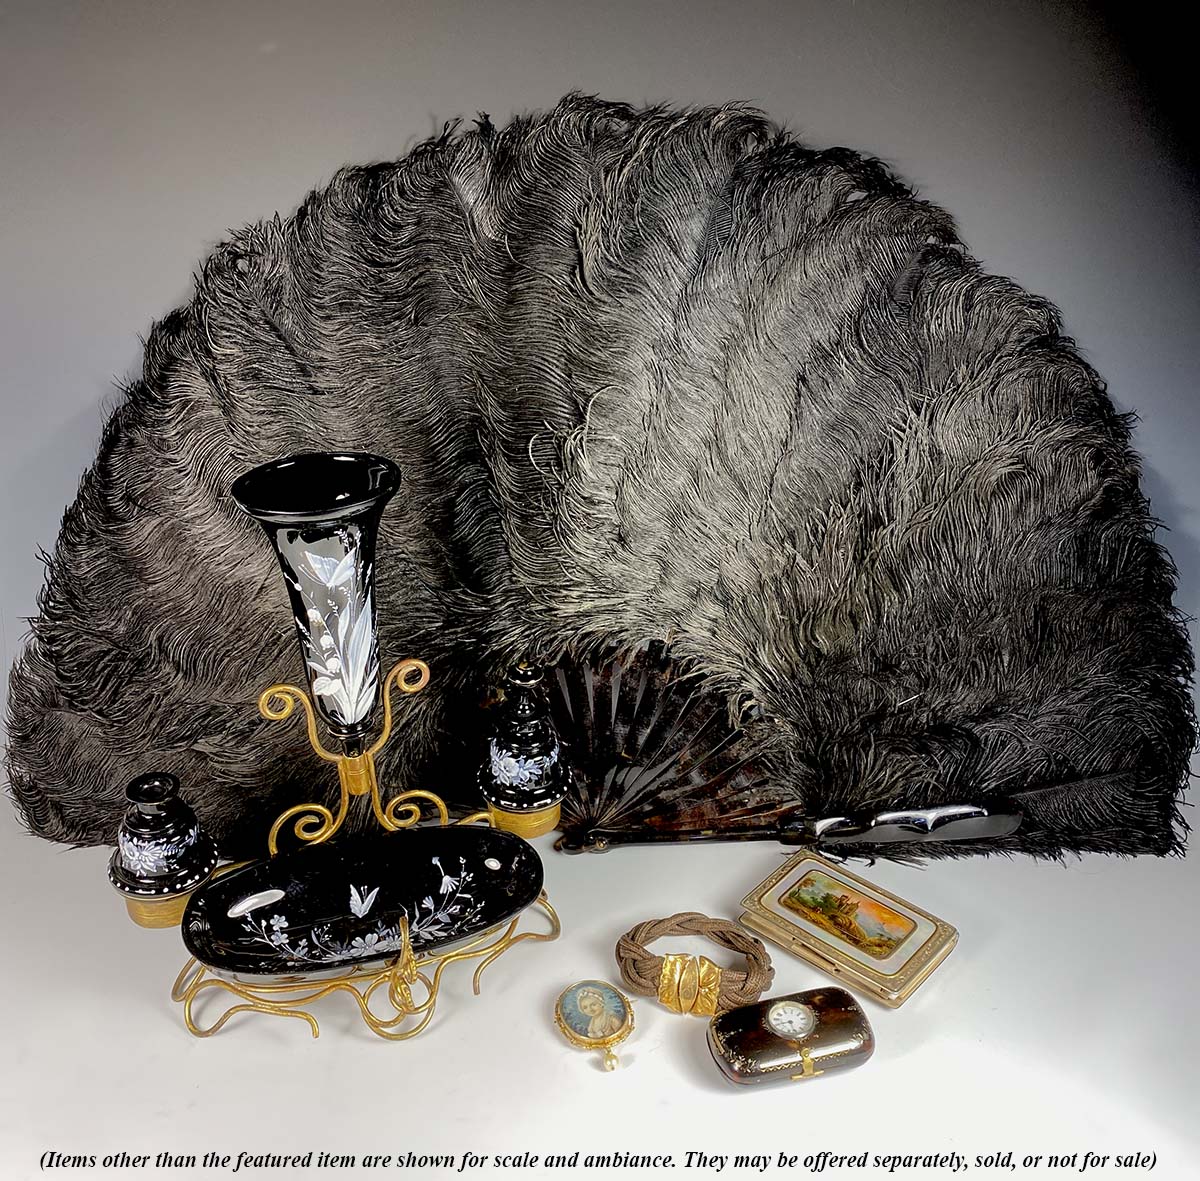 Antiques & Uncommon Treasure Big 19th C. Antique Ostrich Feather Fan, 39 cm Open, Tortoise Shell Monture and 18K Crown Monogram